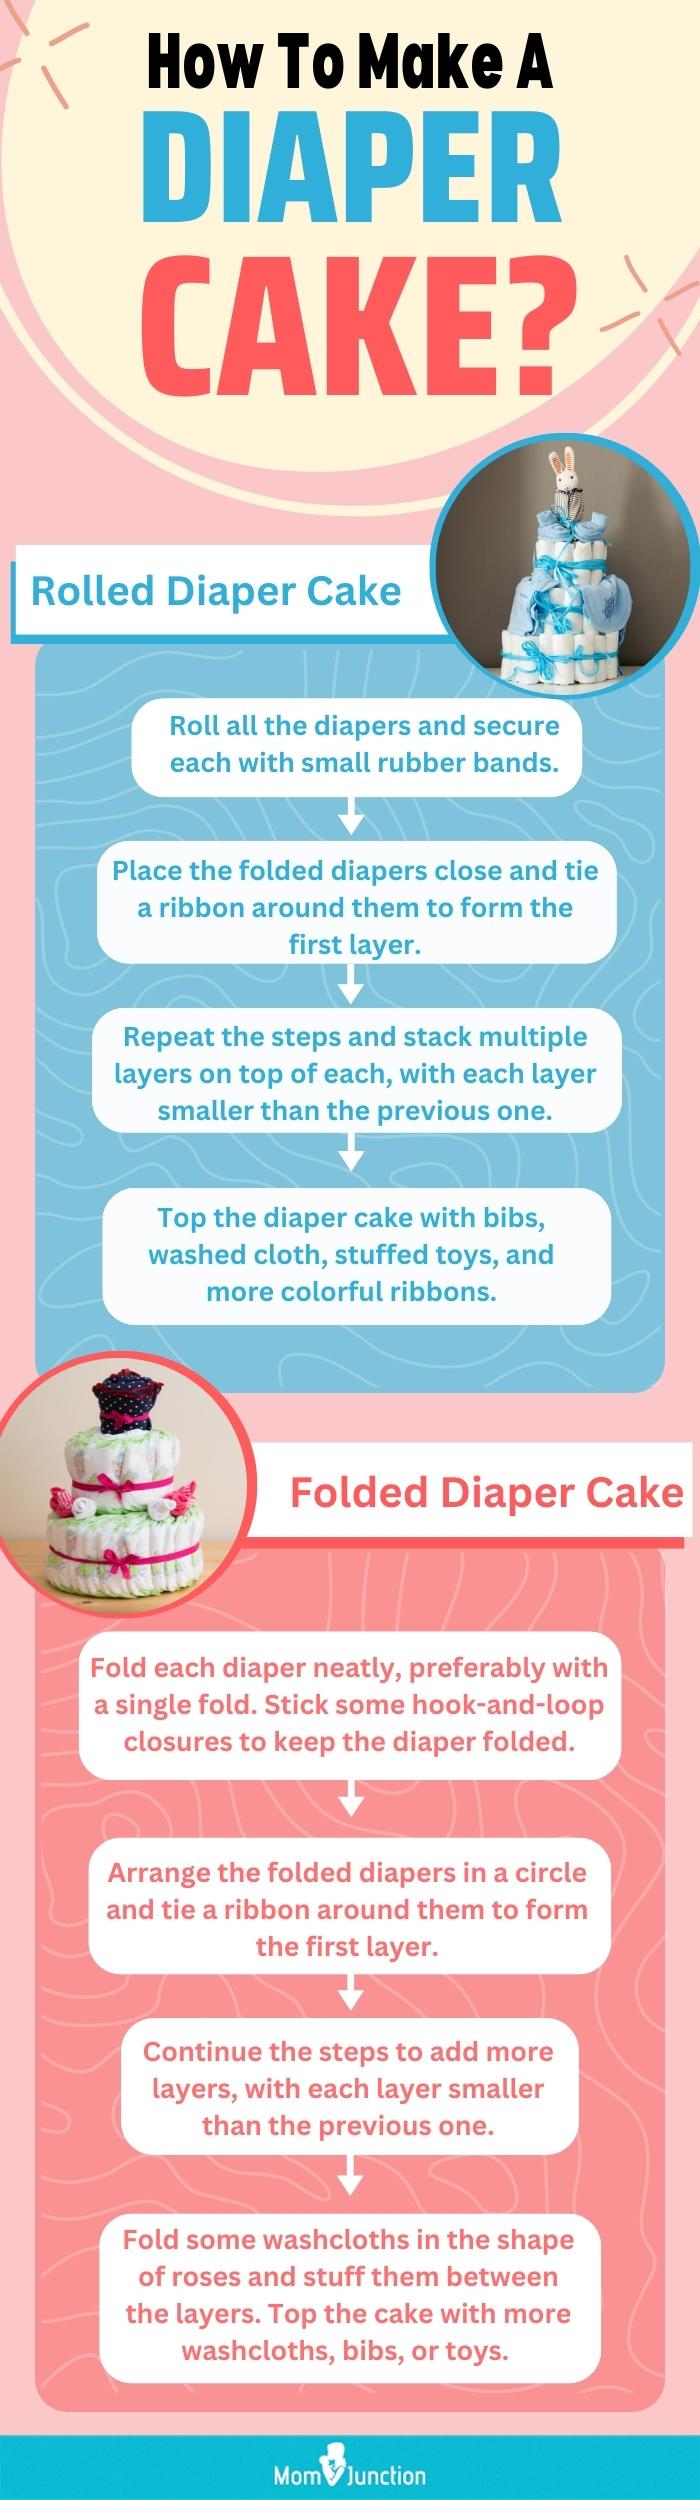 how to make a diaper cake row (infographic)